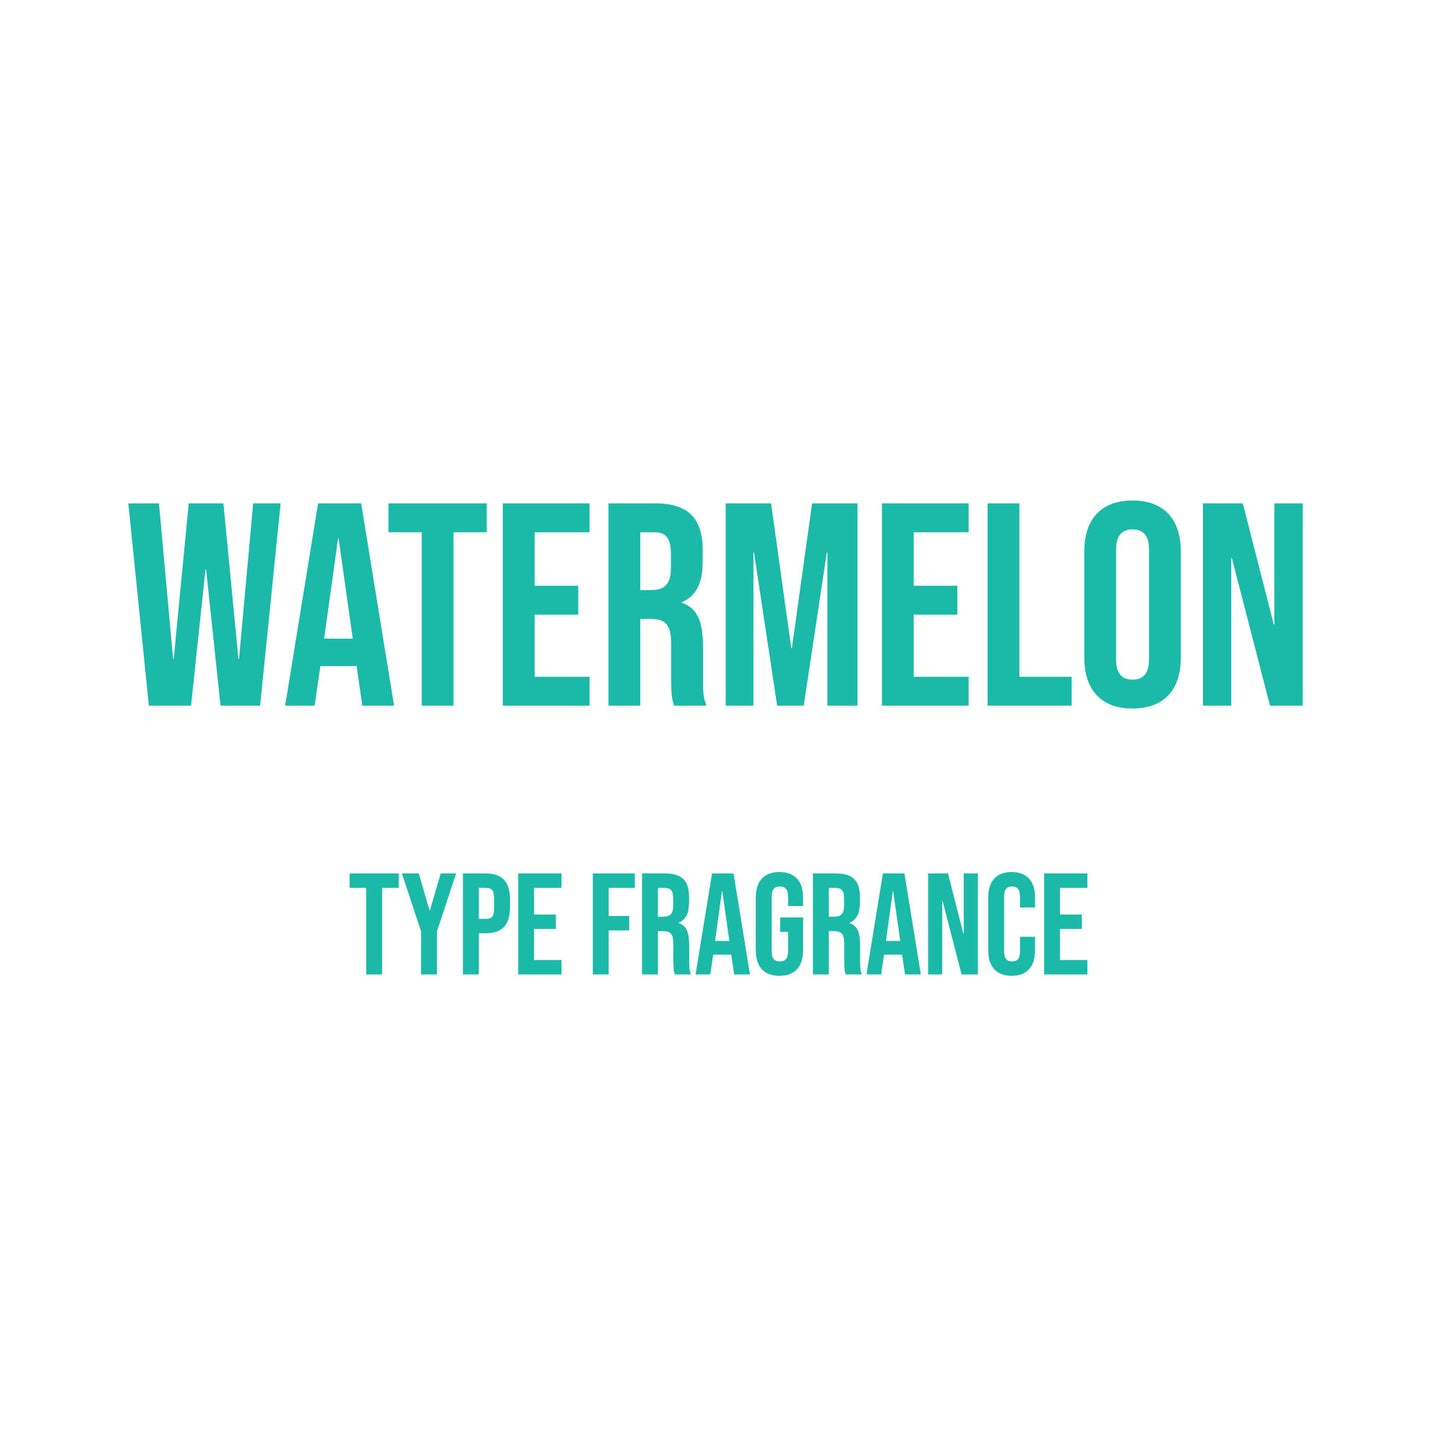 Watermelon Type Fragrance